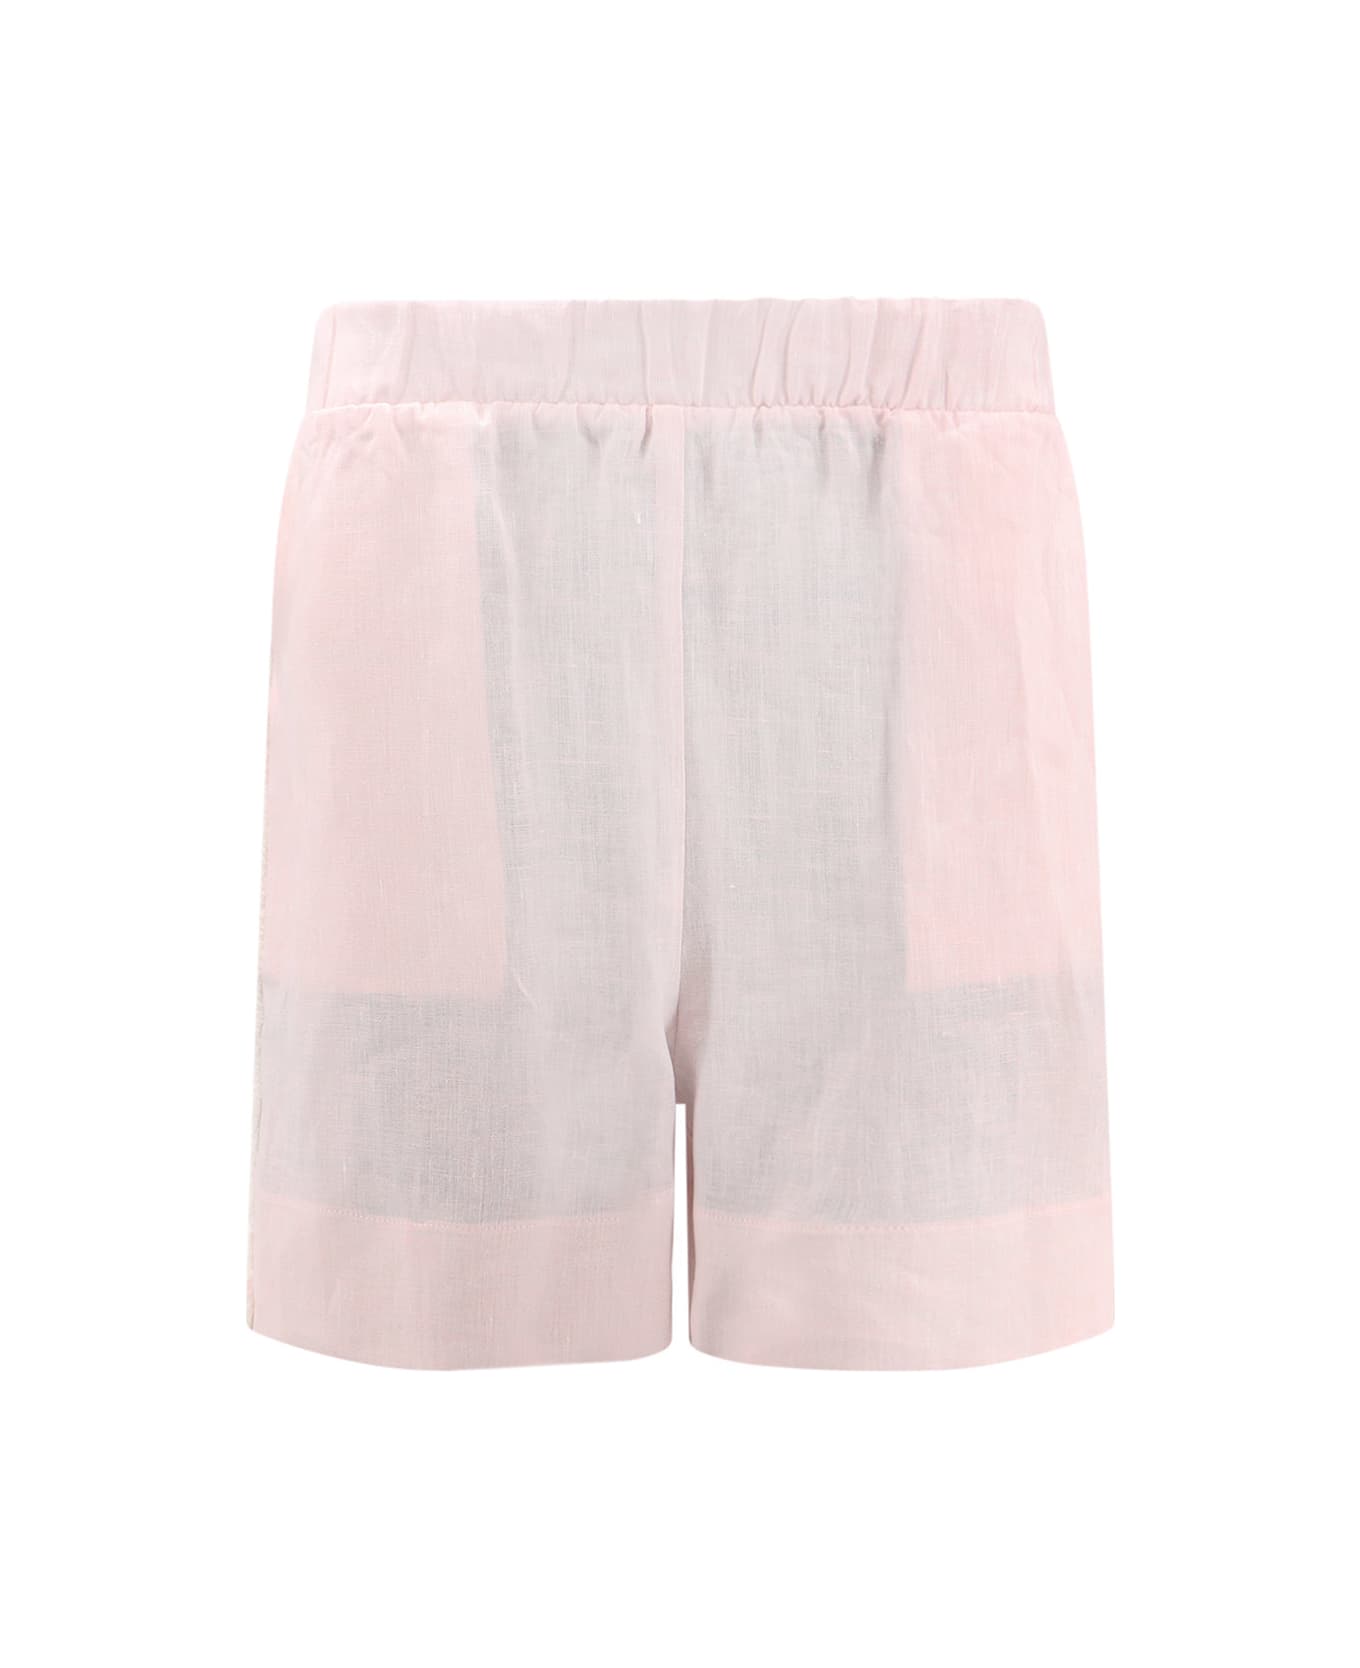 MVP Wardrobe Shorts - Pink ショートパンツ